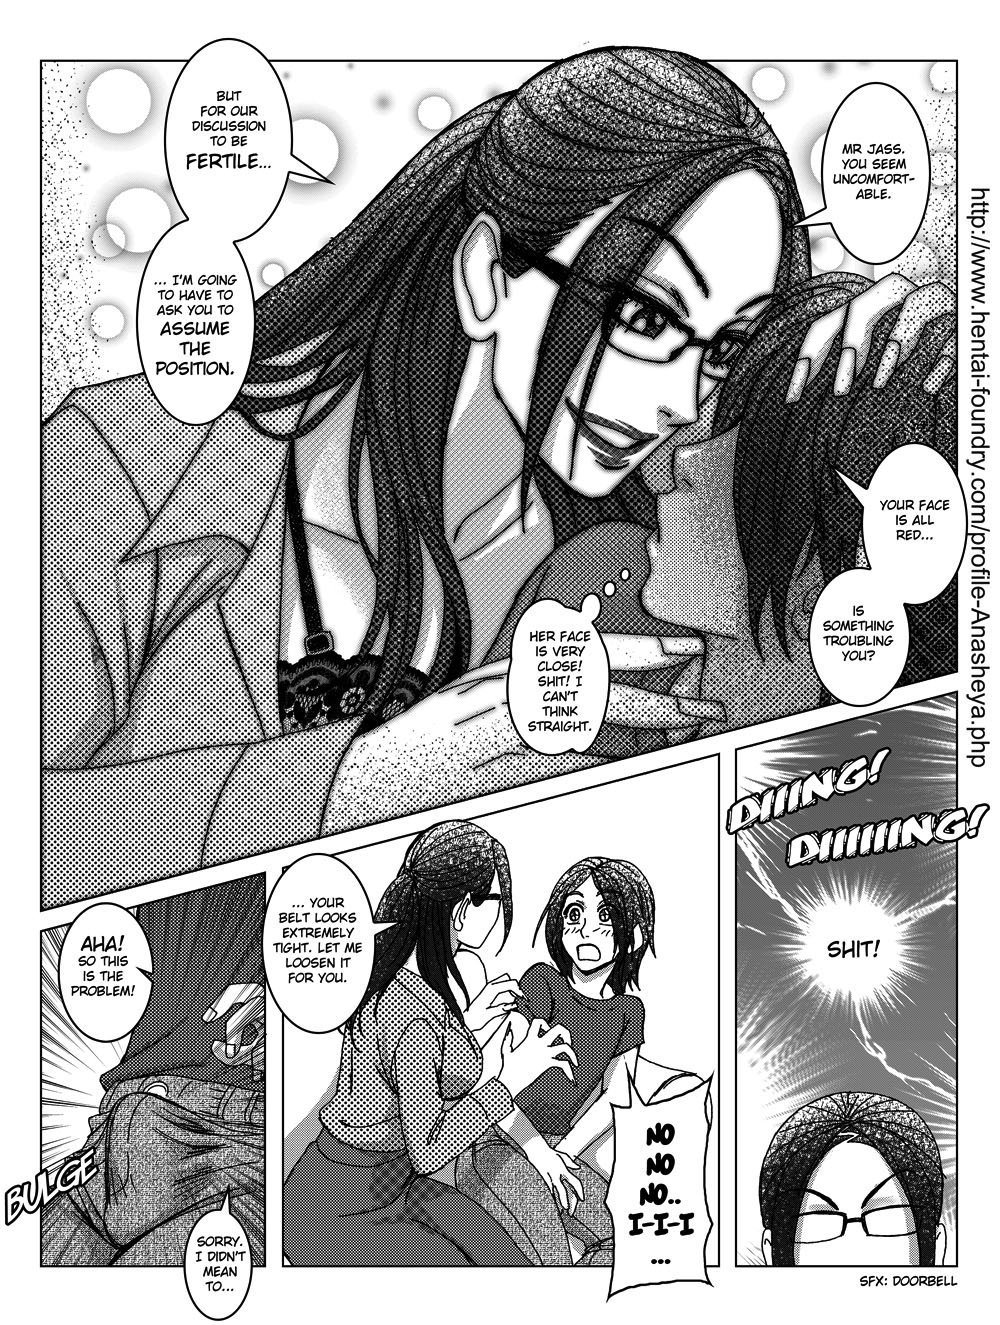 Read [anasheya] Anal Assault Lesson 1 Hentai Online Porn Manga And Doujinshi